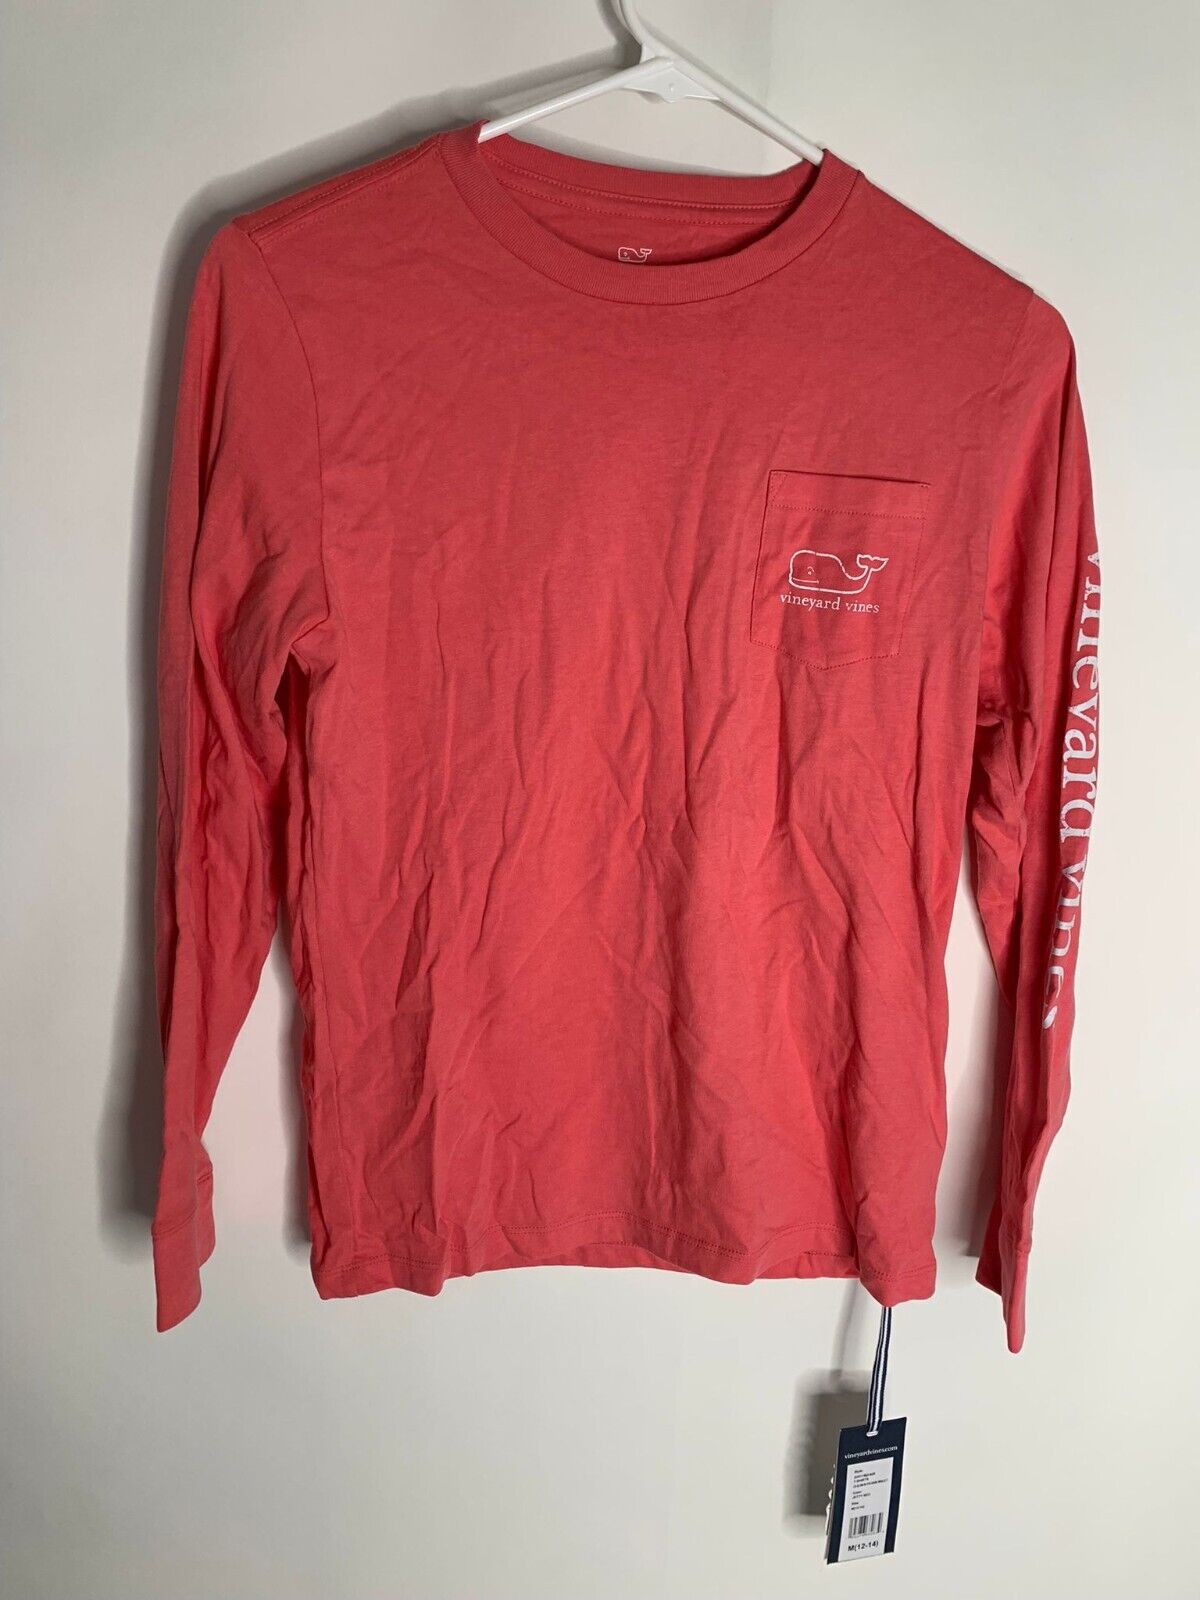 Vineyard Vines Boys M 12-14 Jetty Red Glow in the Dark Whale T Shirt